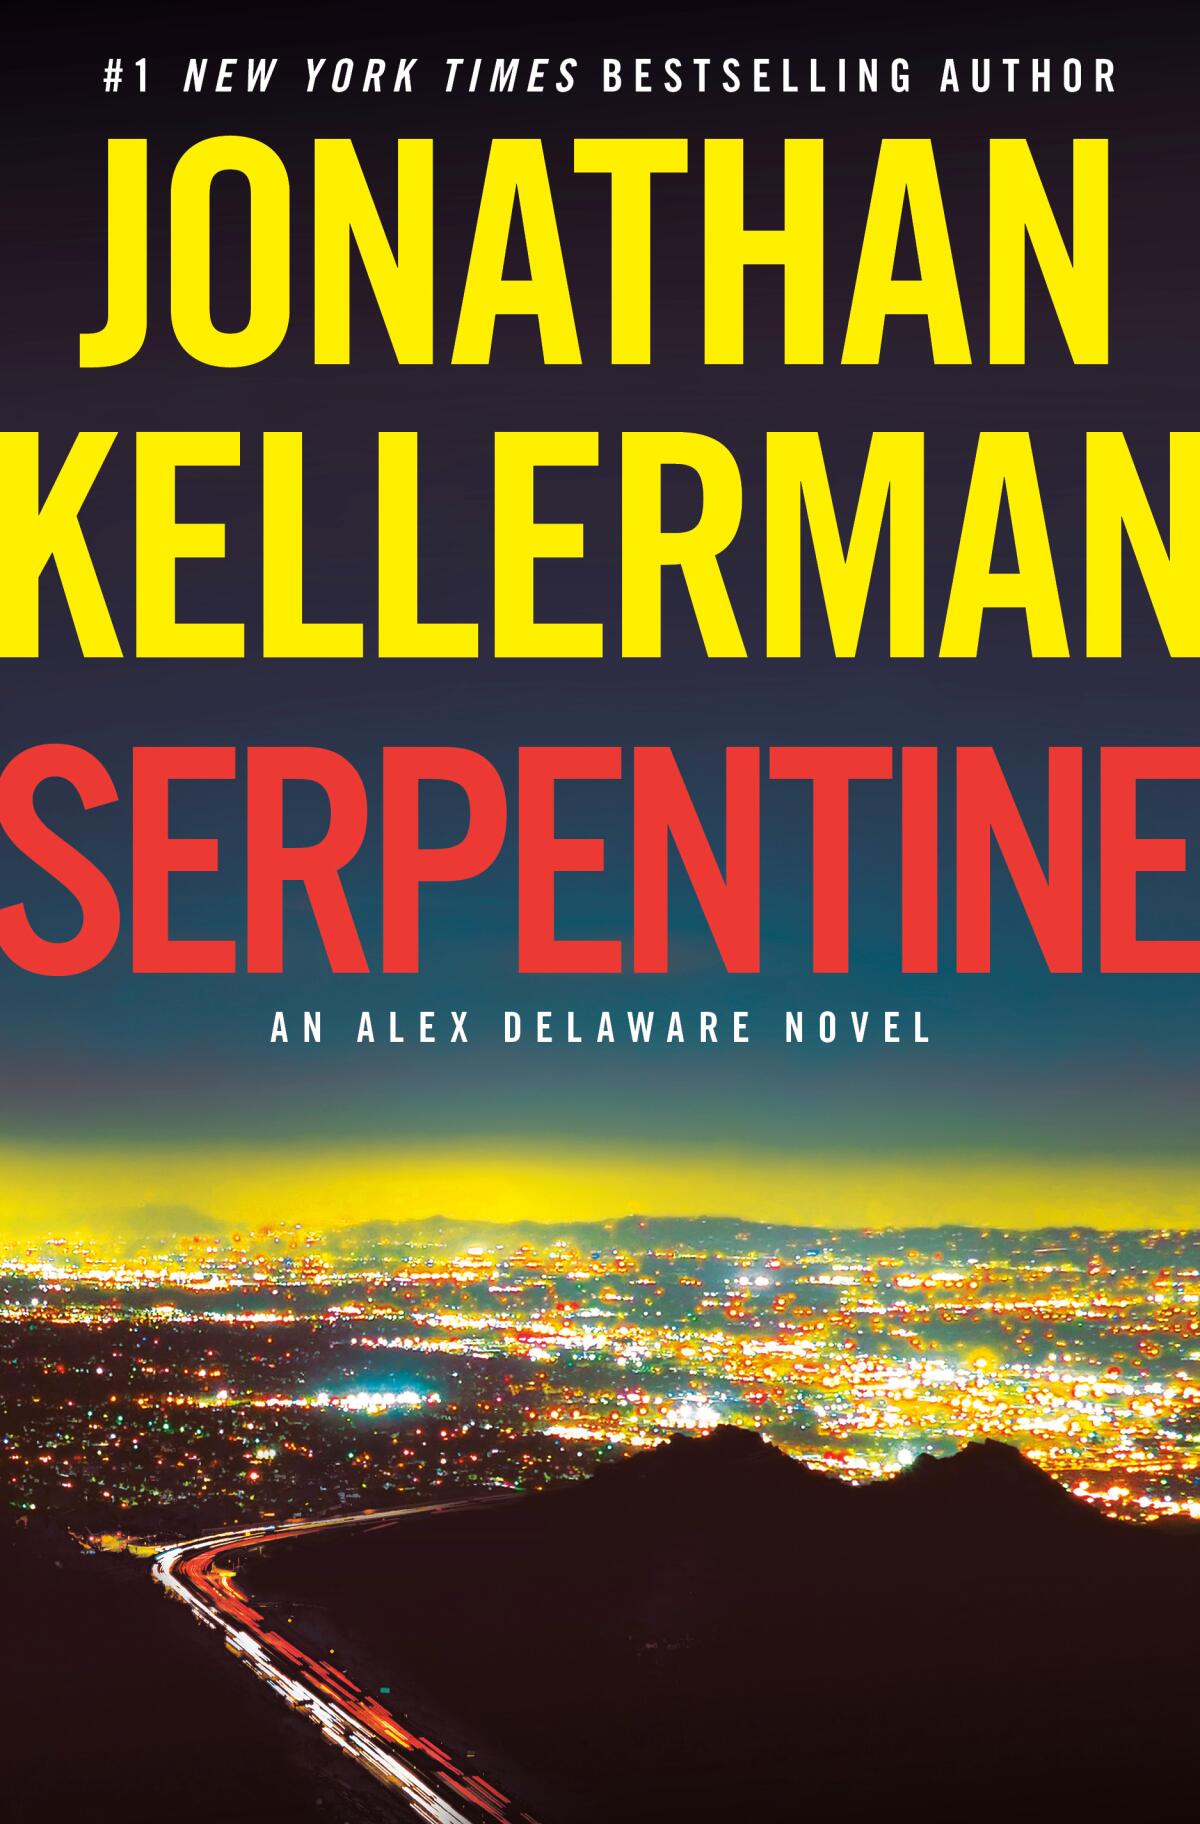 "Serpentine: An Alex Delaware Novel" by Jonathan Kellerman